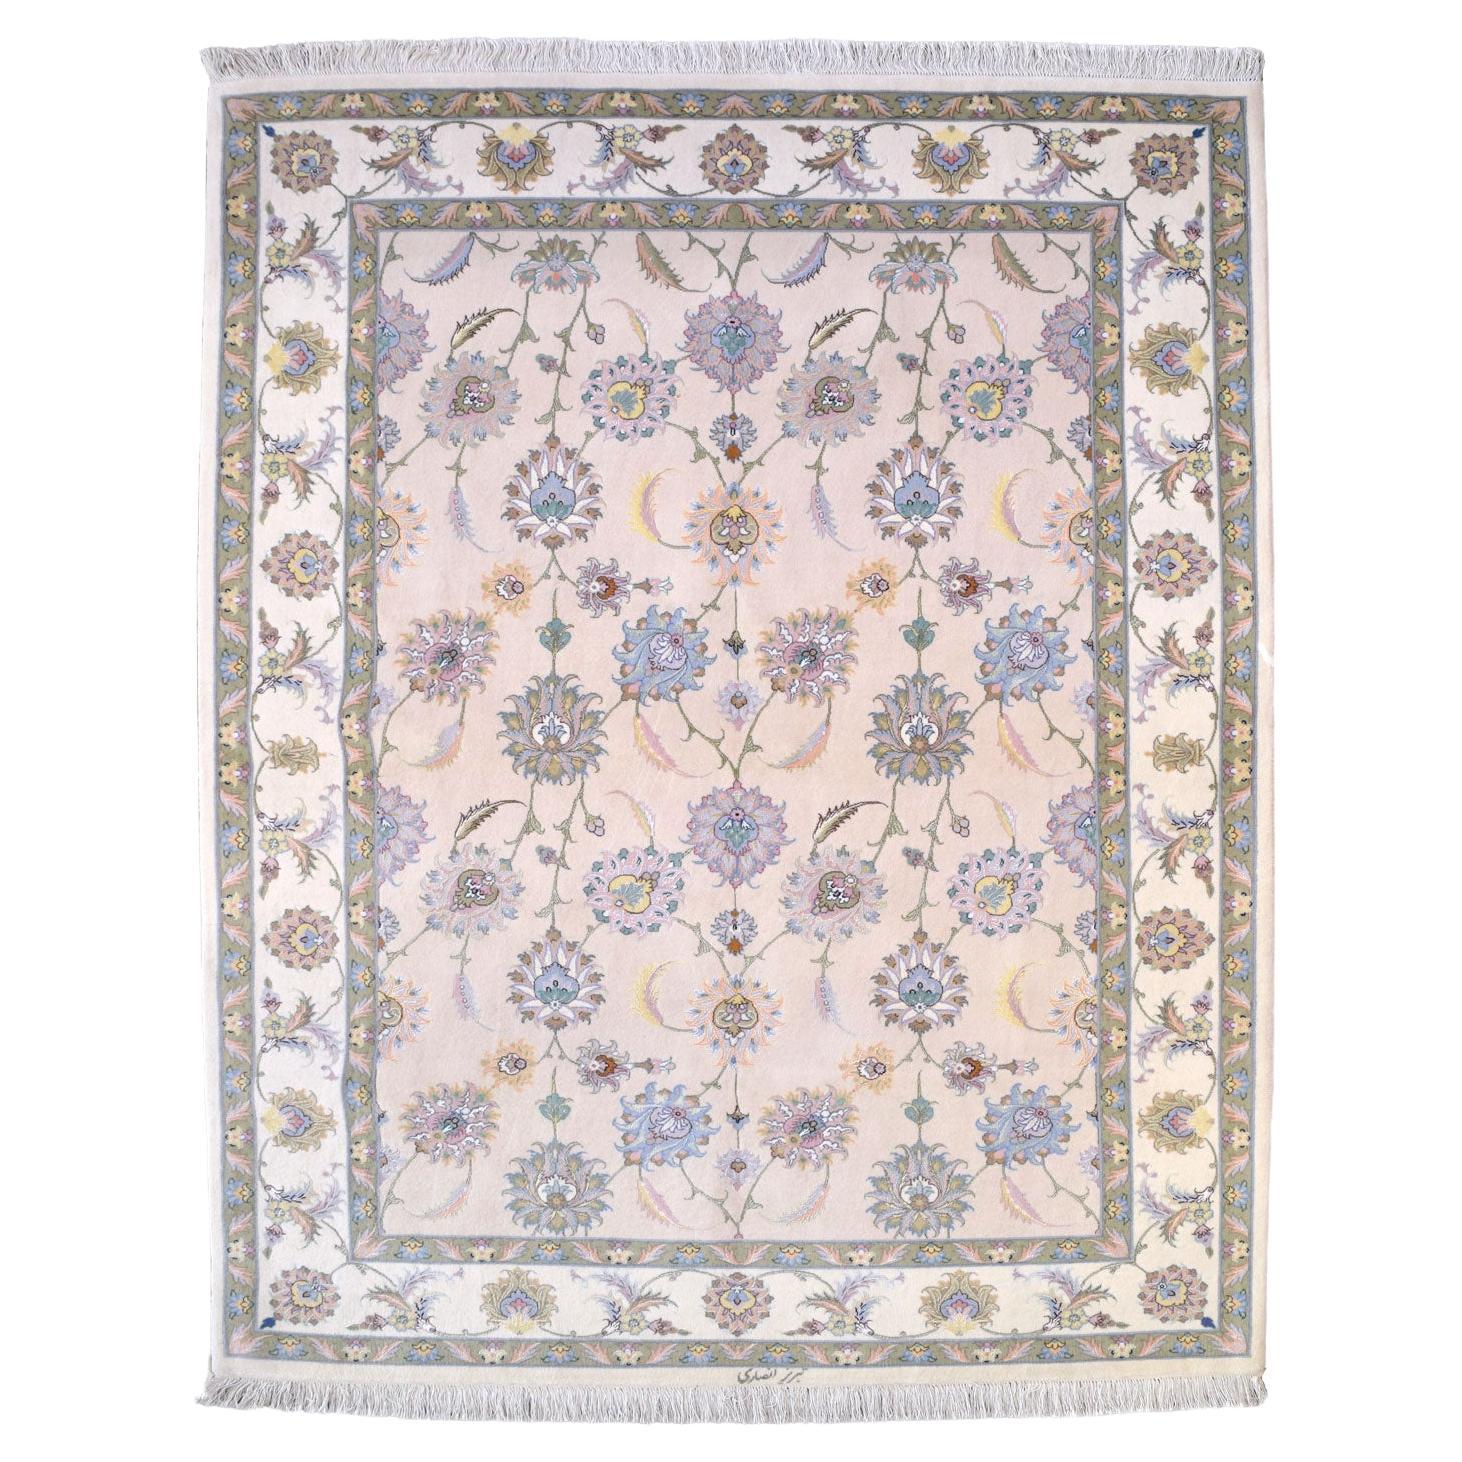 Pastel Tabriz Persian Rug, Wool and Silk, 5' x 7'